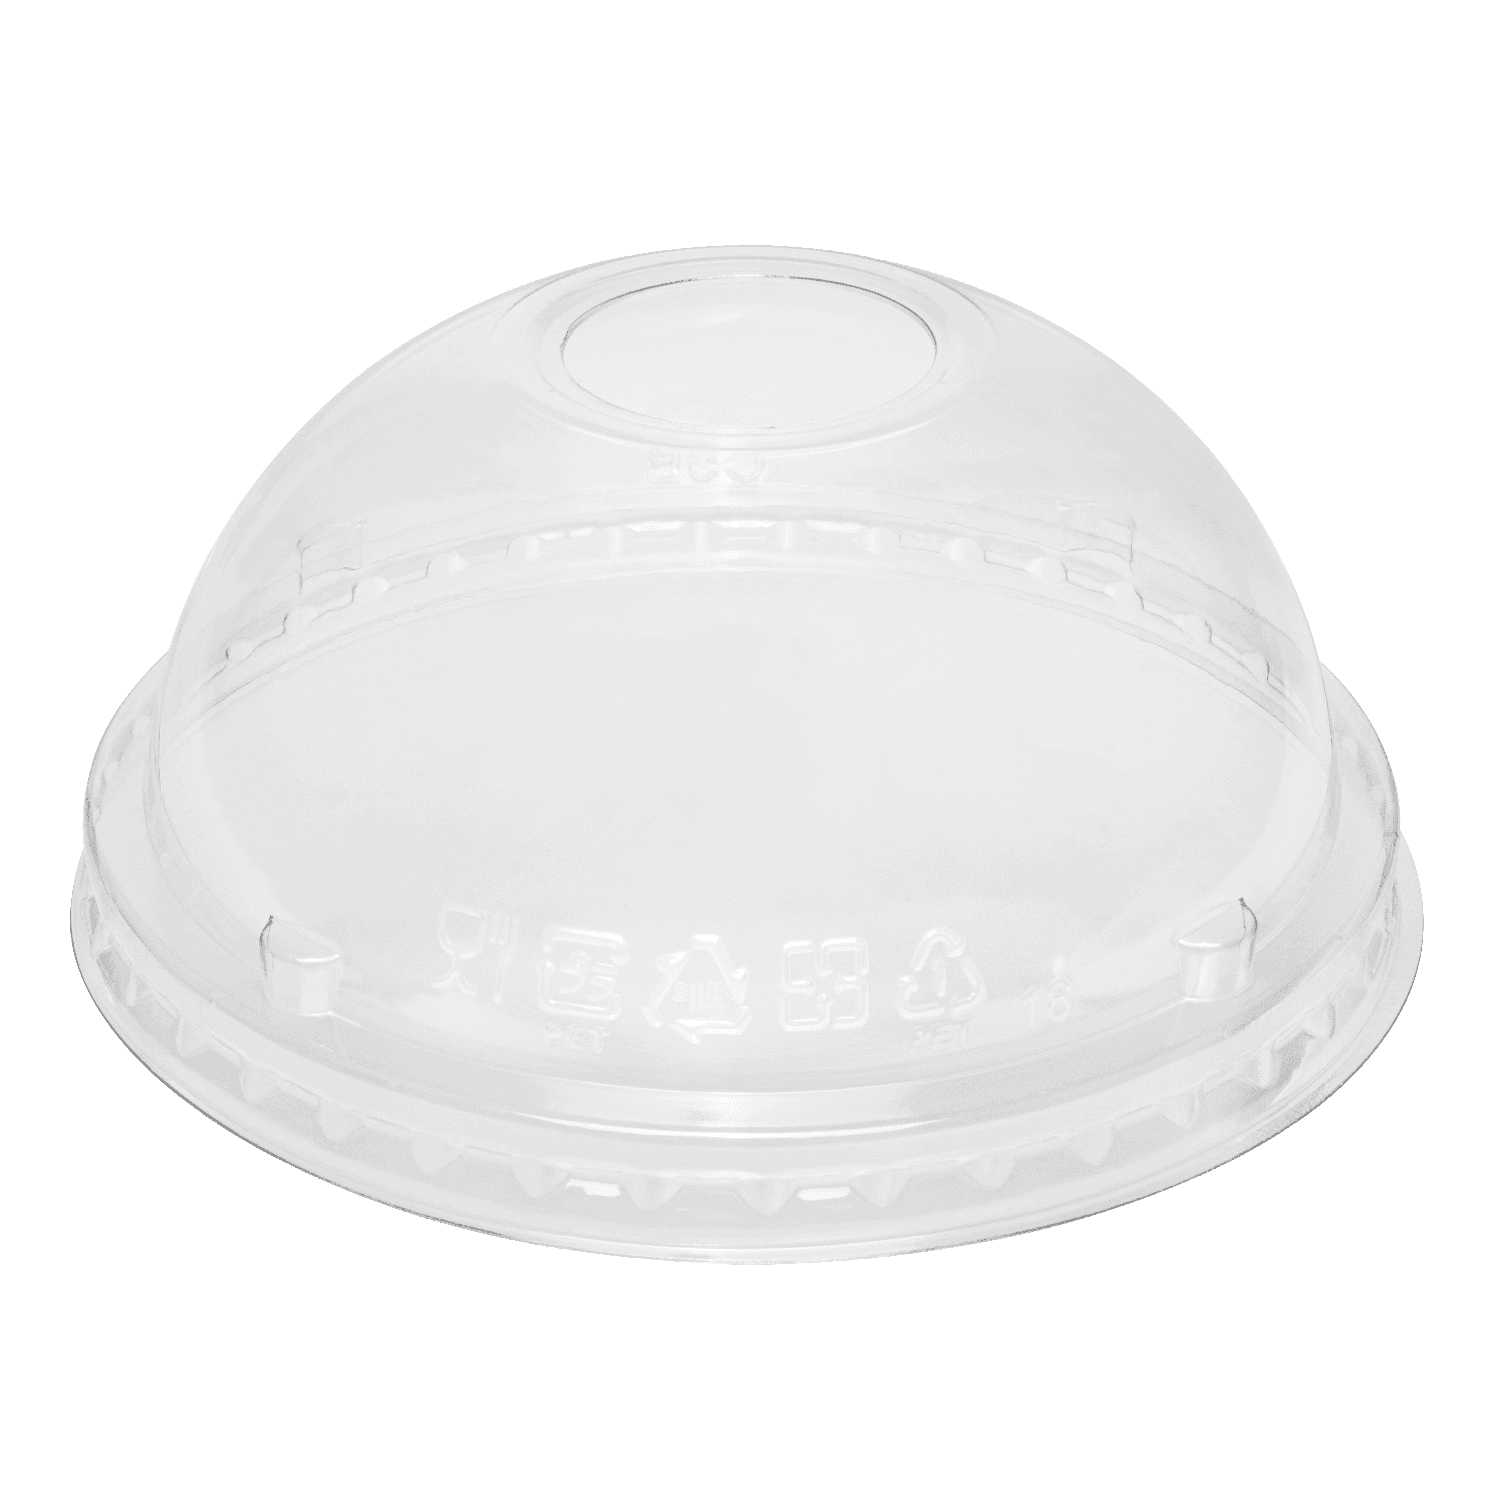 Karat 95mm PP Plastic Dome Lids - 2,000 pcs